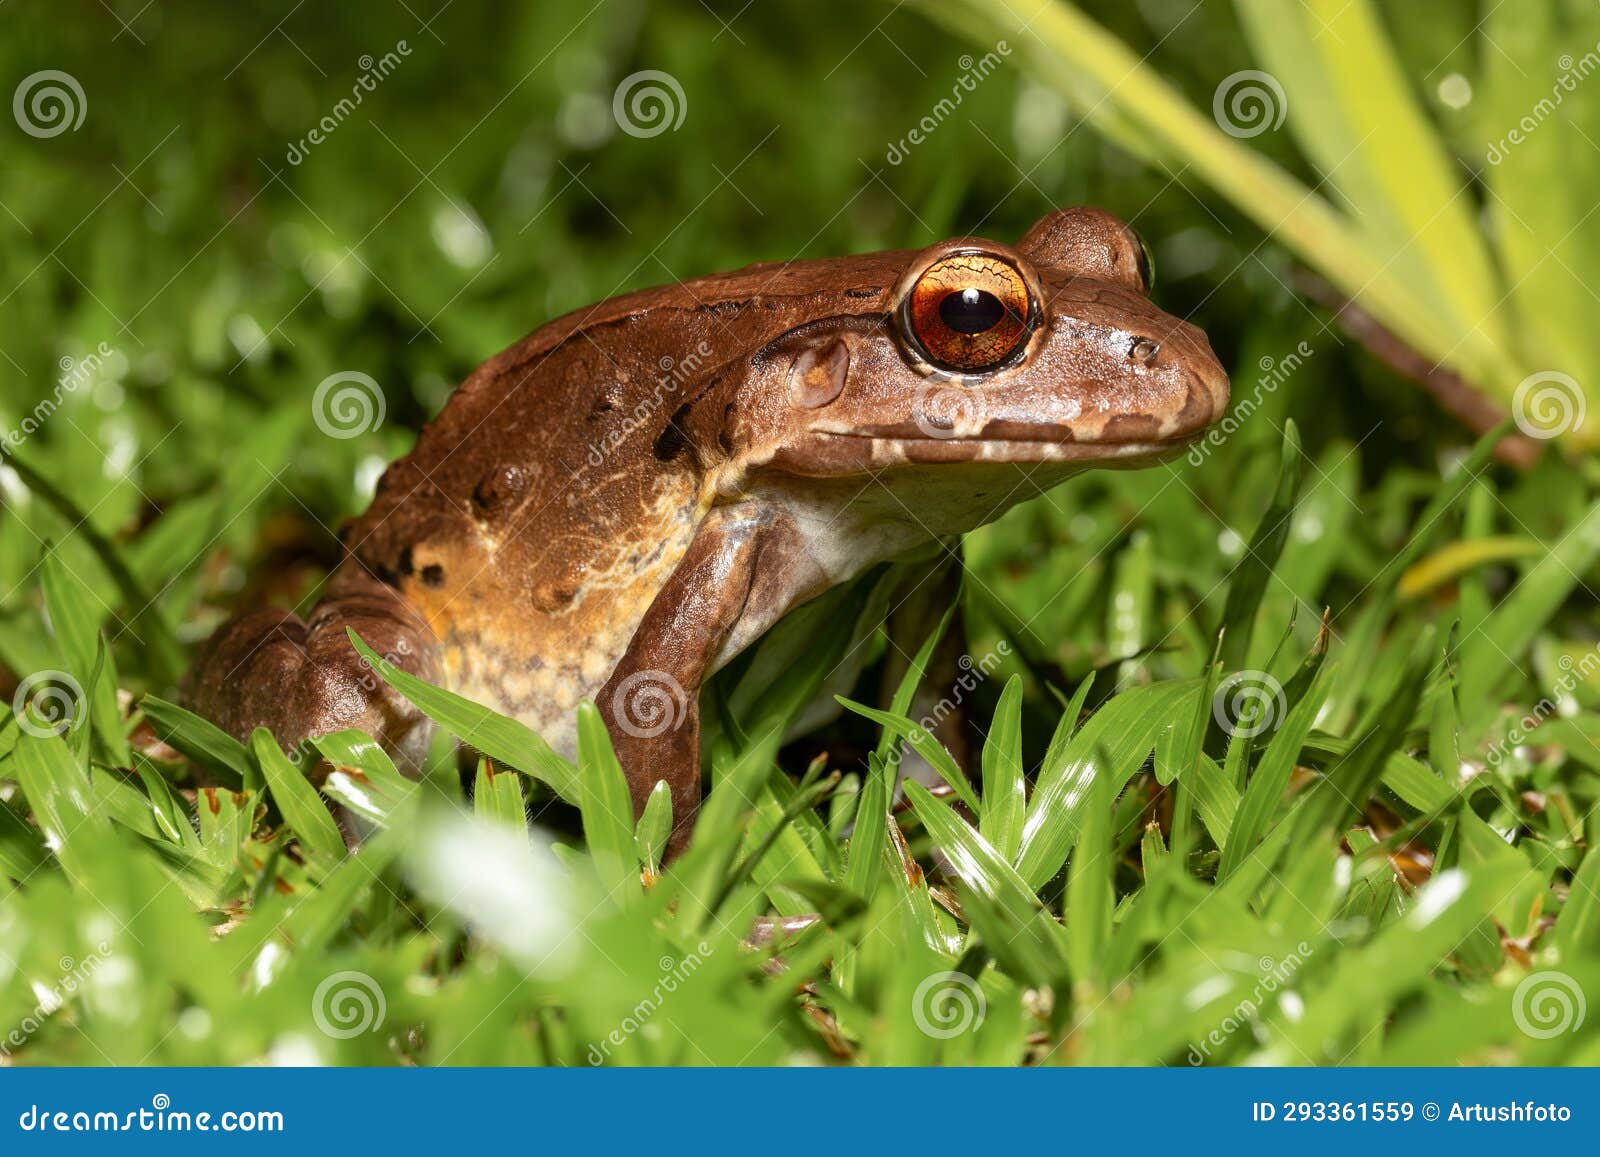 savages thin-toed frog - leptodactylus savagei, refugio de vida silvestre cano negro, costa rica wildlife